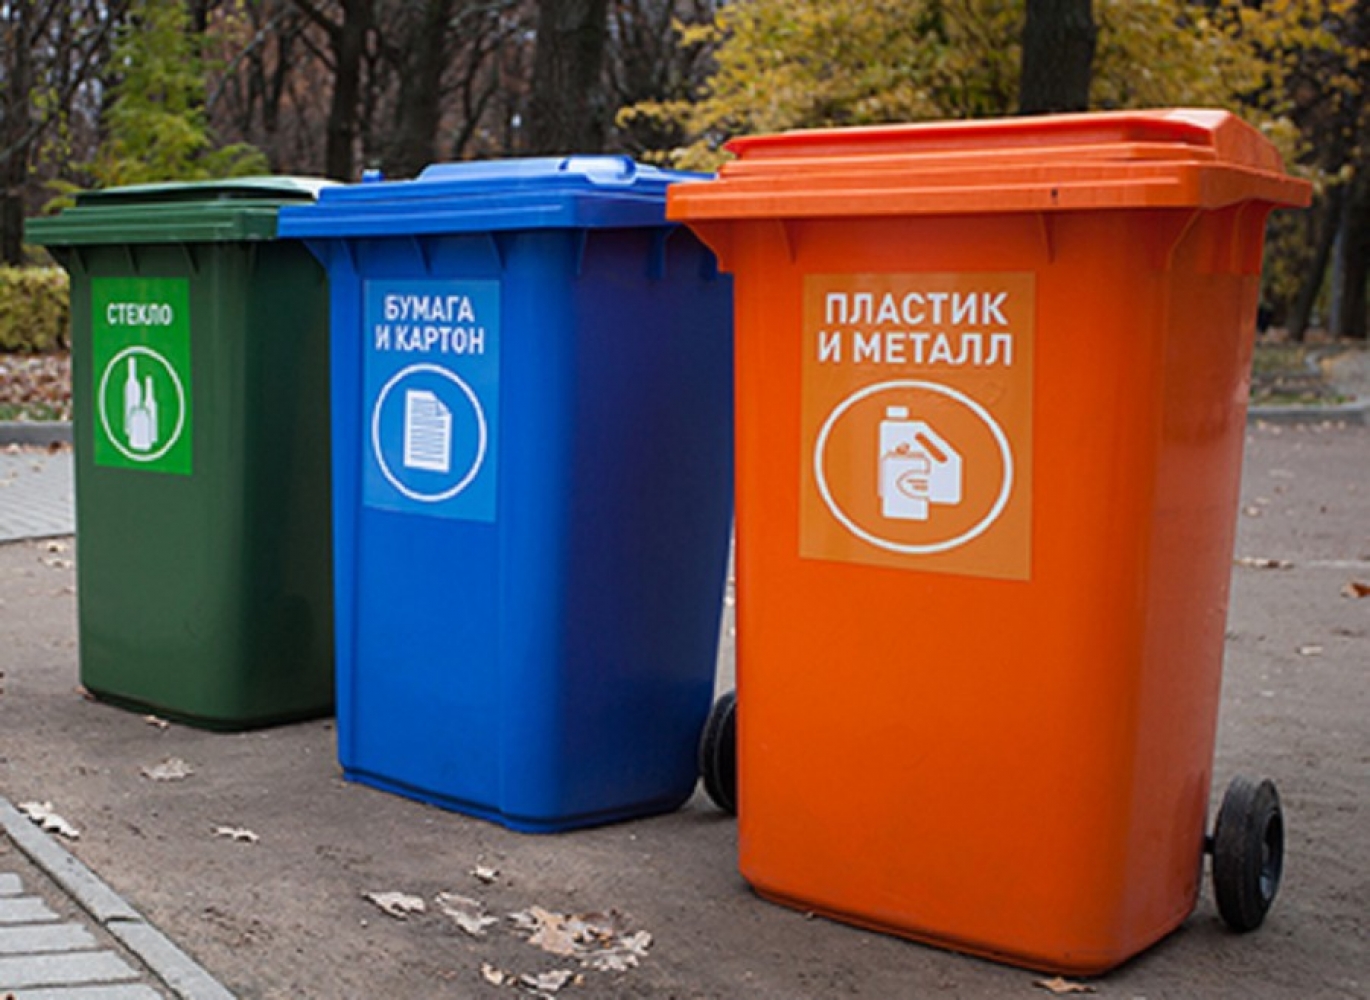 Услуги ЖКХ подешевеют при раздельном сборе мусора